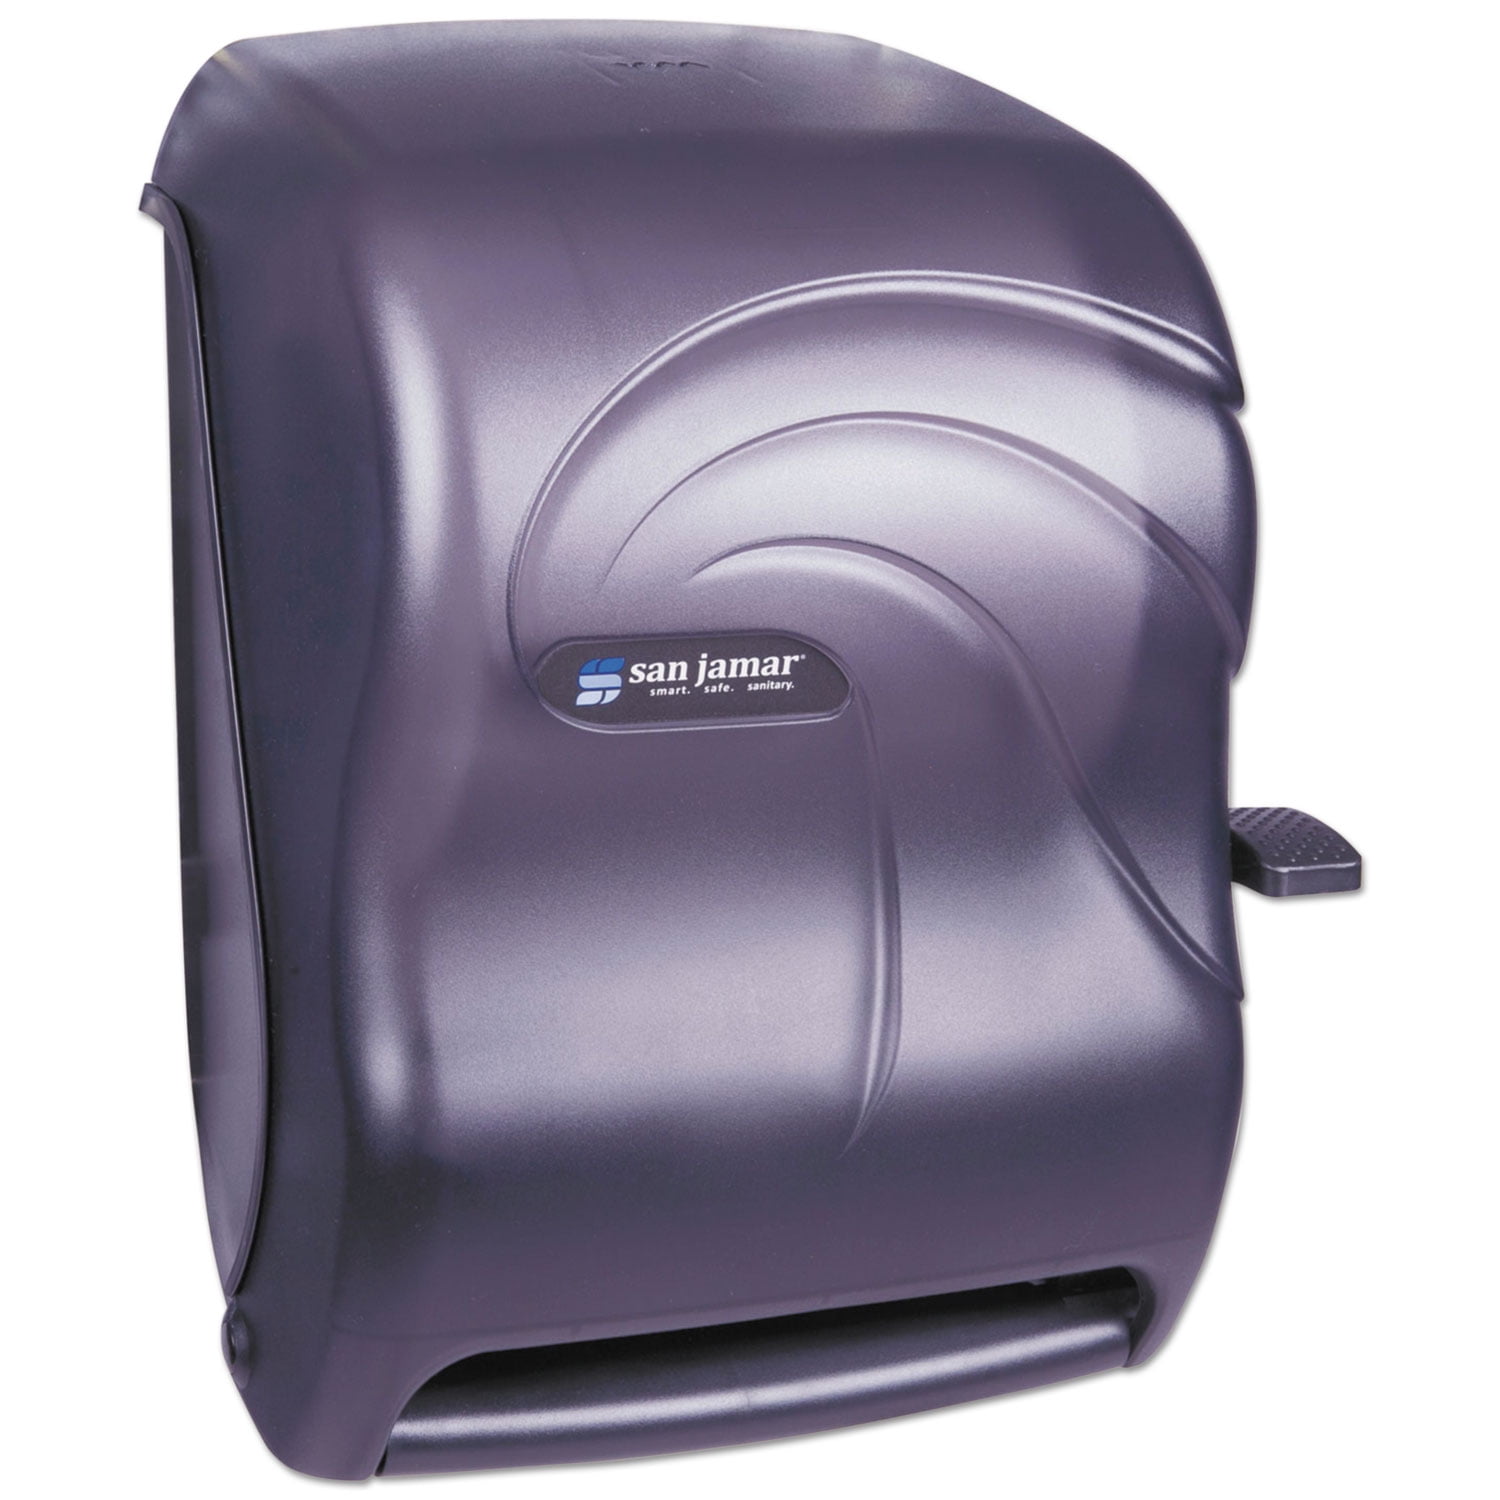 Integra Lever Roll Towel Dispenser 